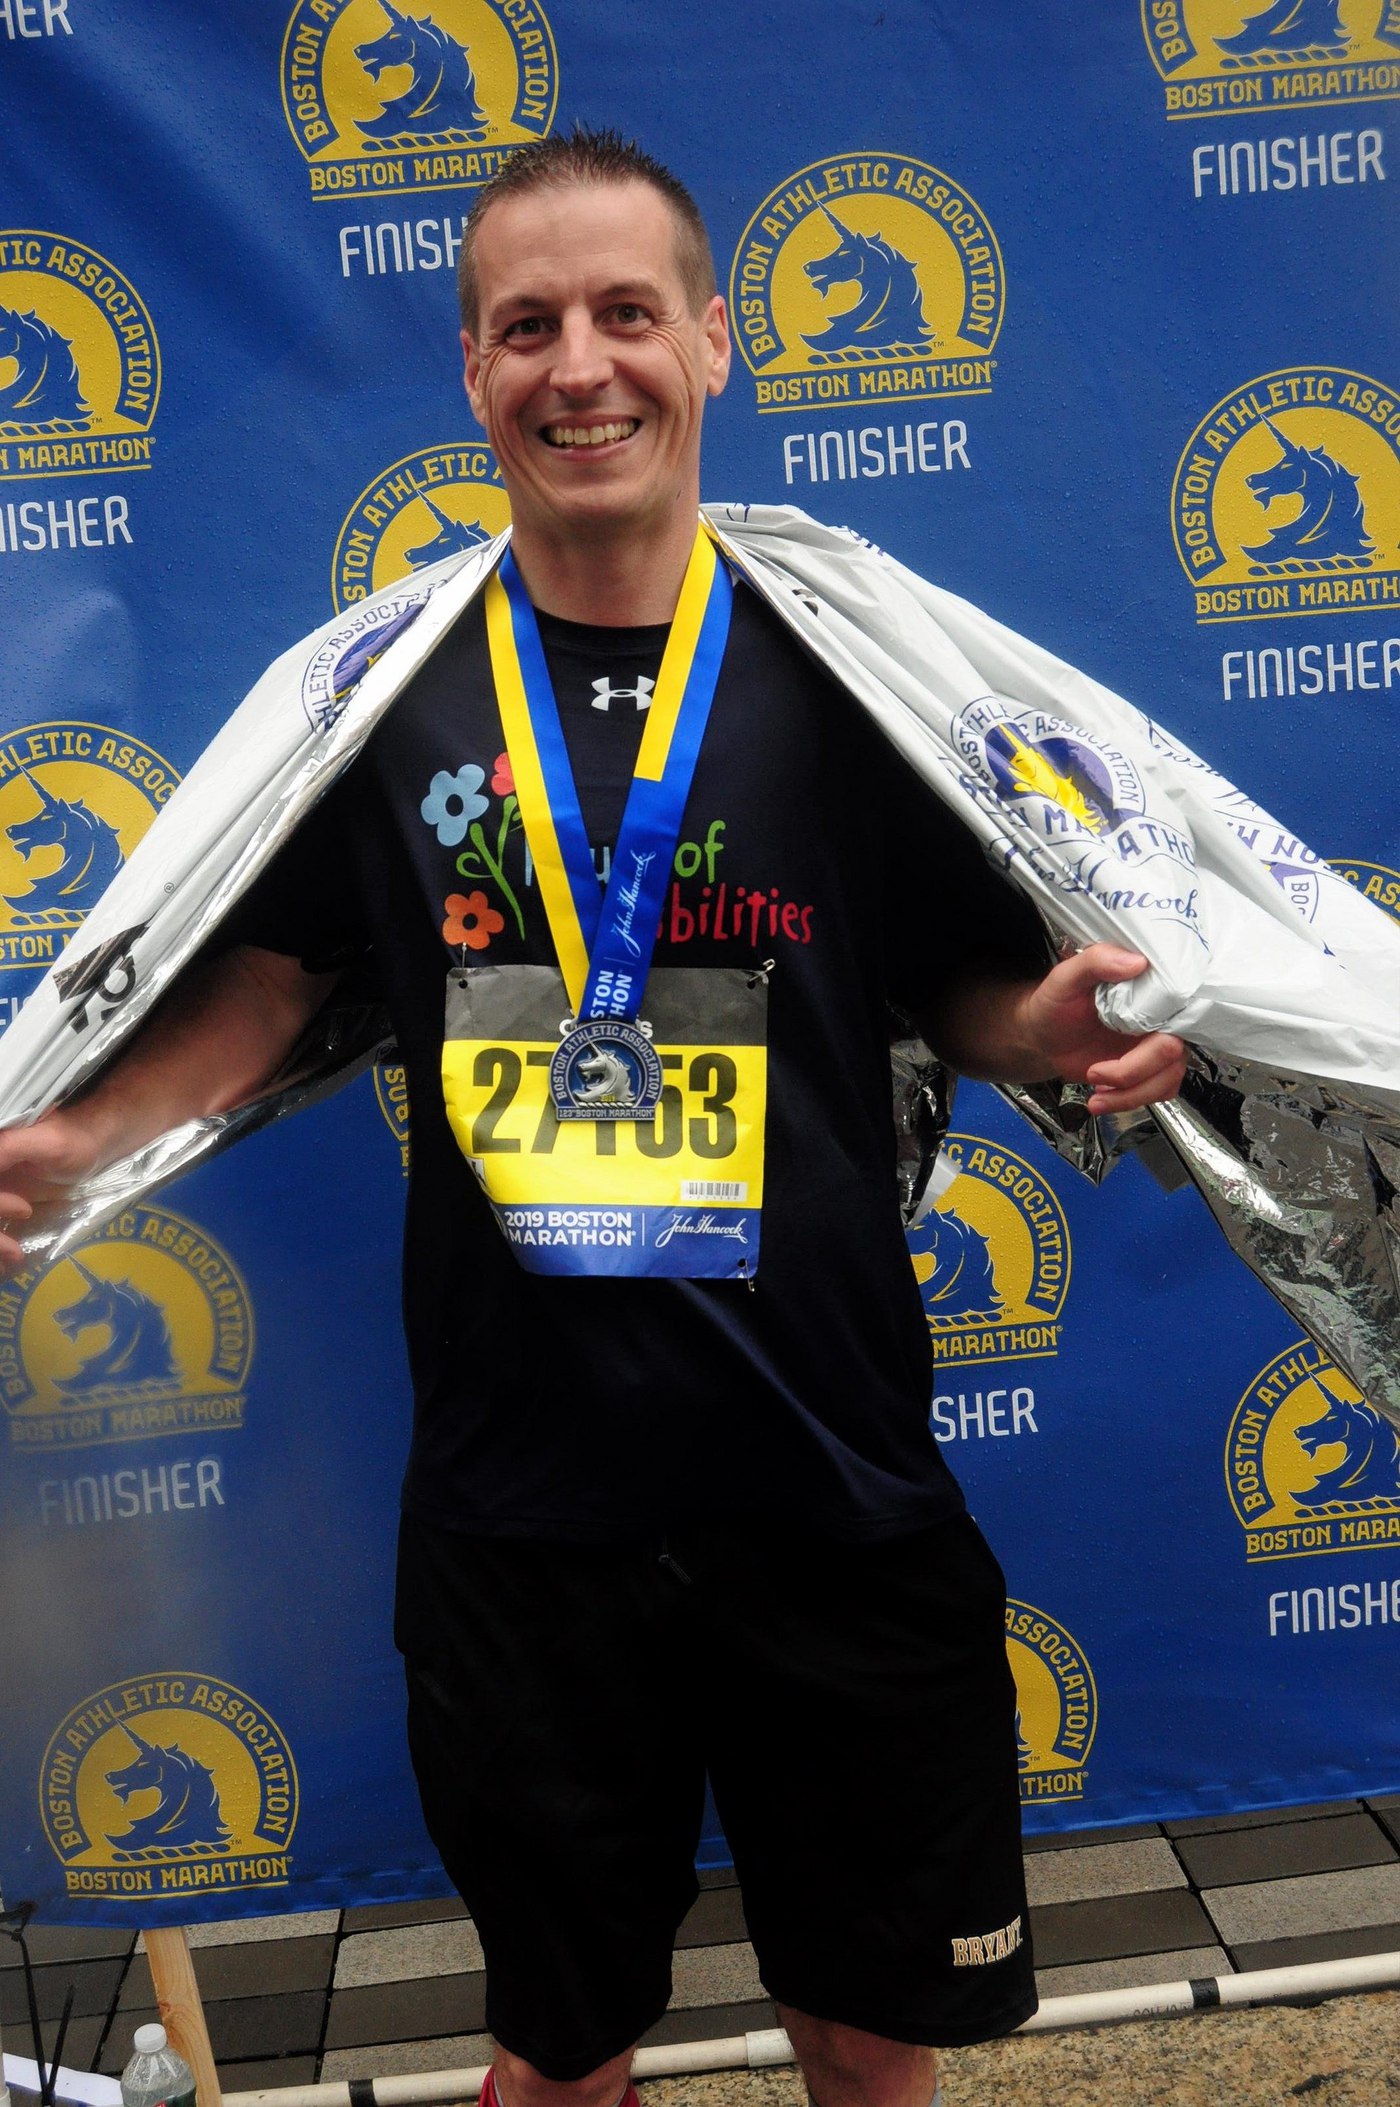 Chris-Pintarich-Berry-Insurance-Boston-Marathon